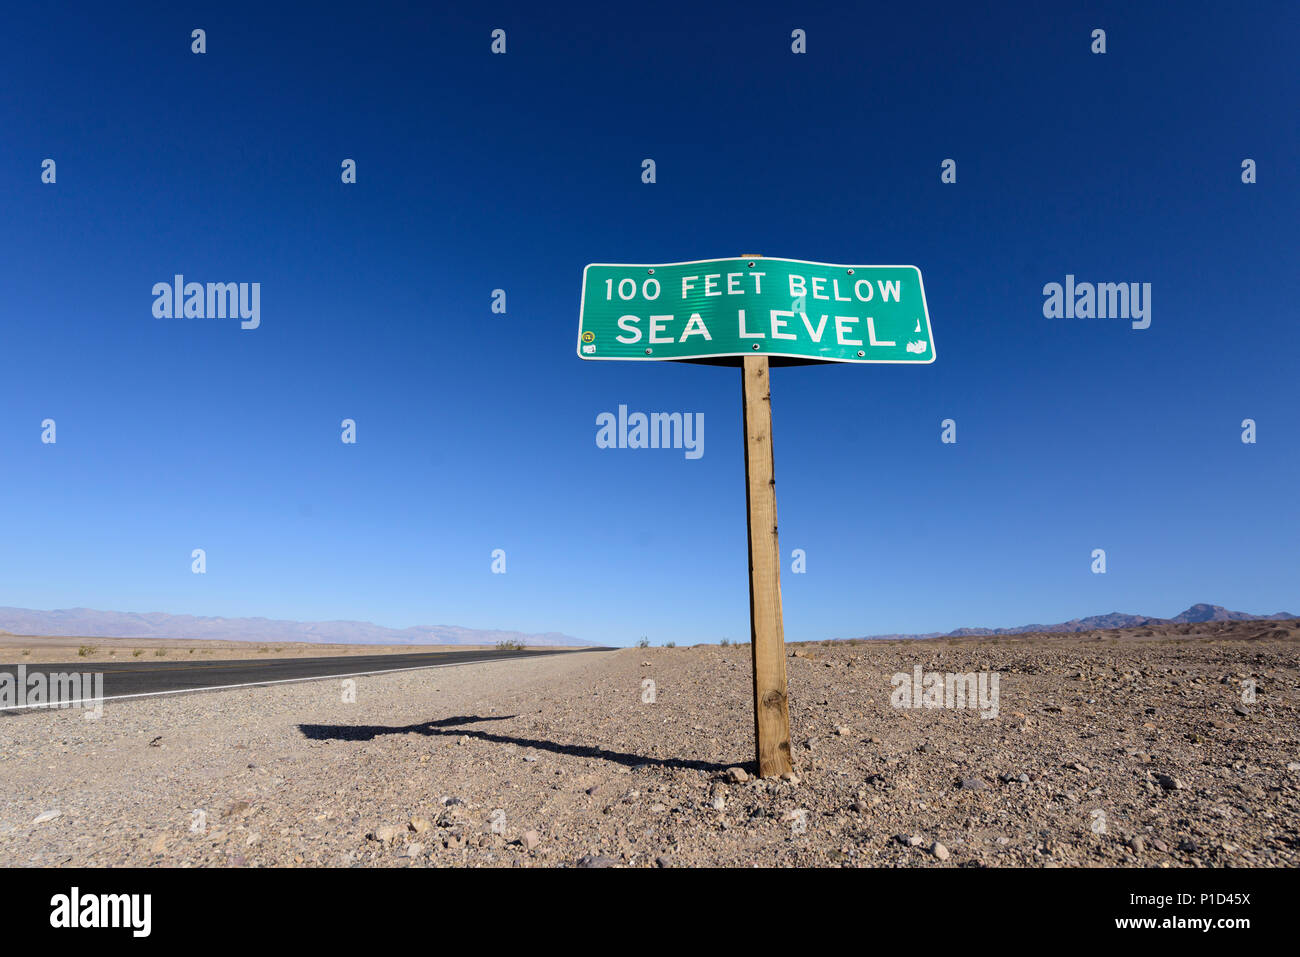 Death Valley National Park badlands 100 feet below sea level sign. Stock Photo